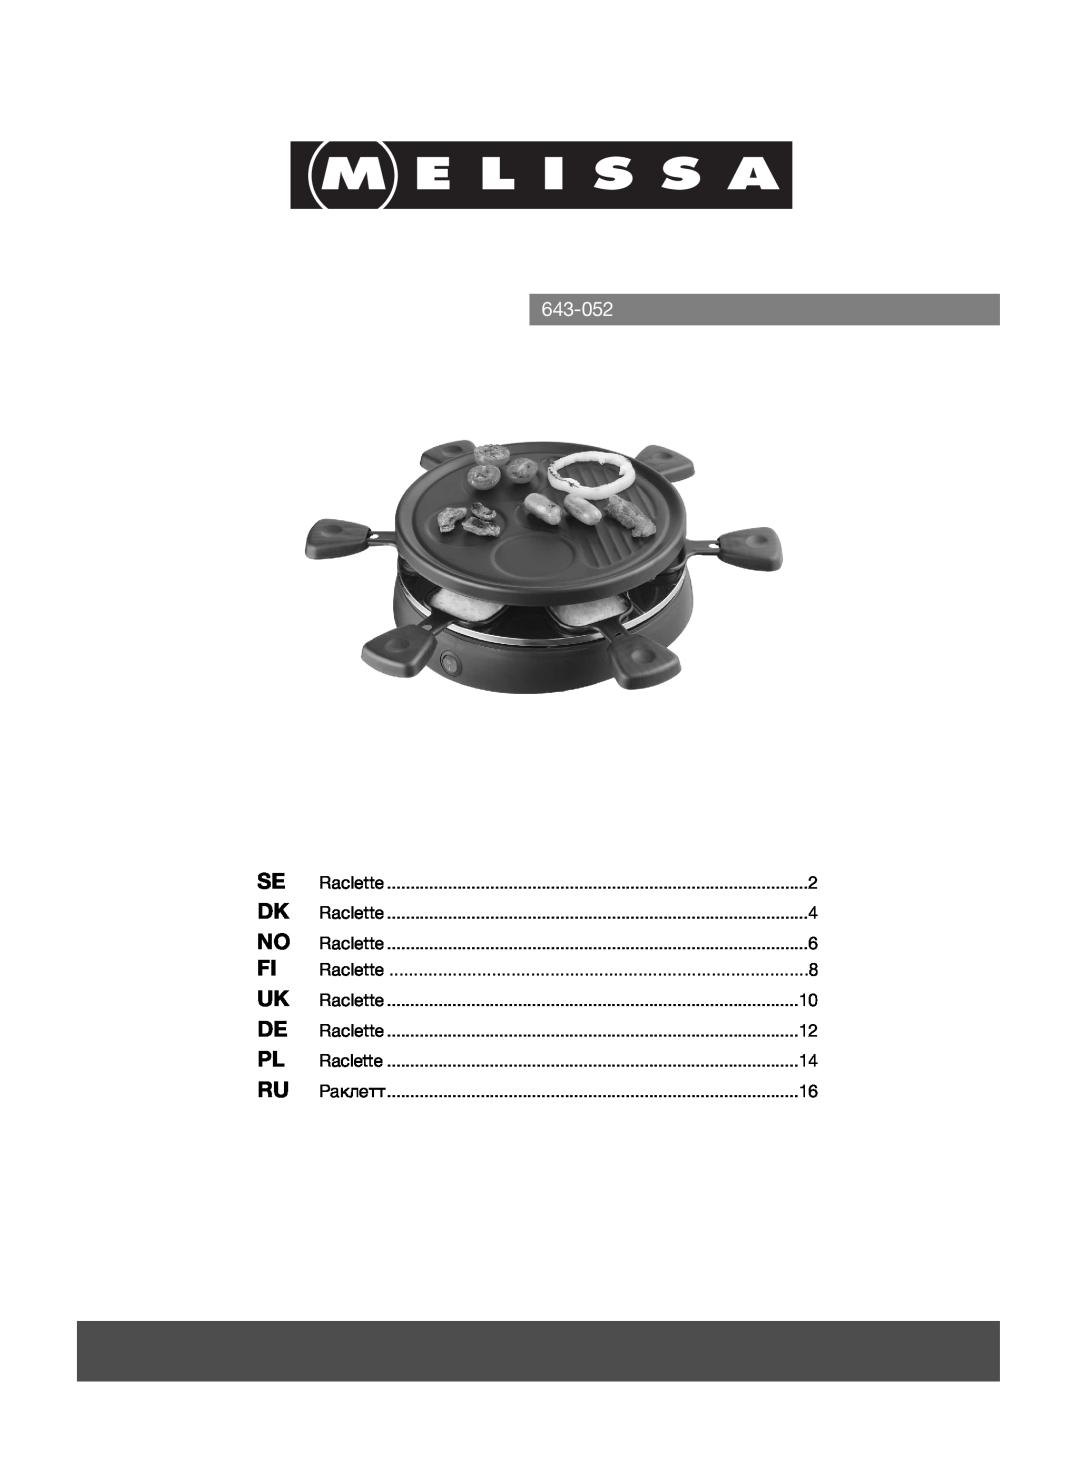 Melissa 643-052 manual Raclette, Раклетт 